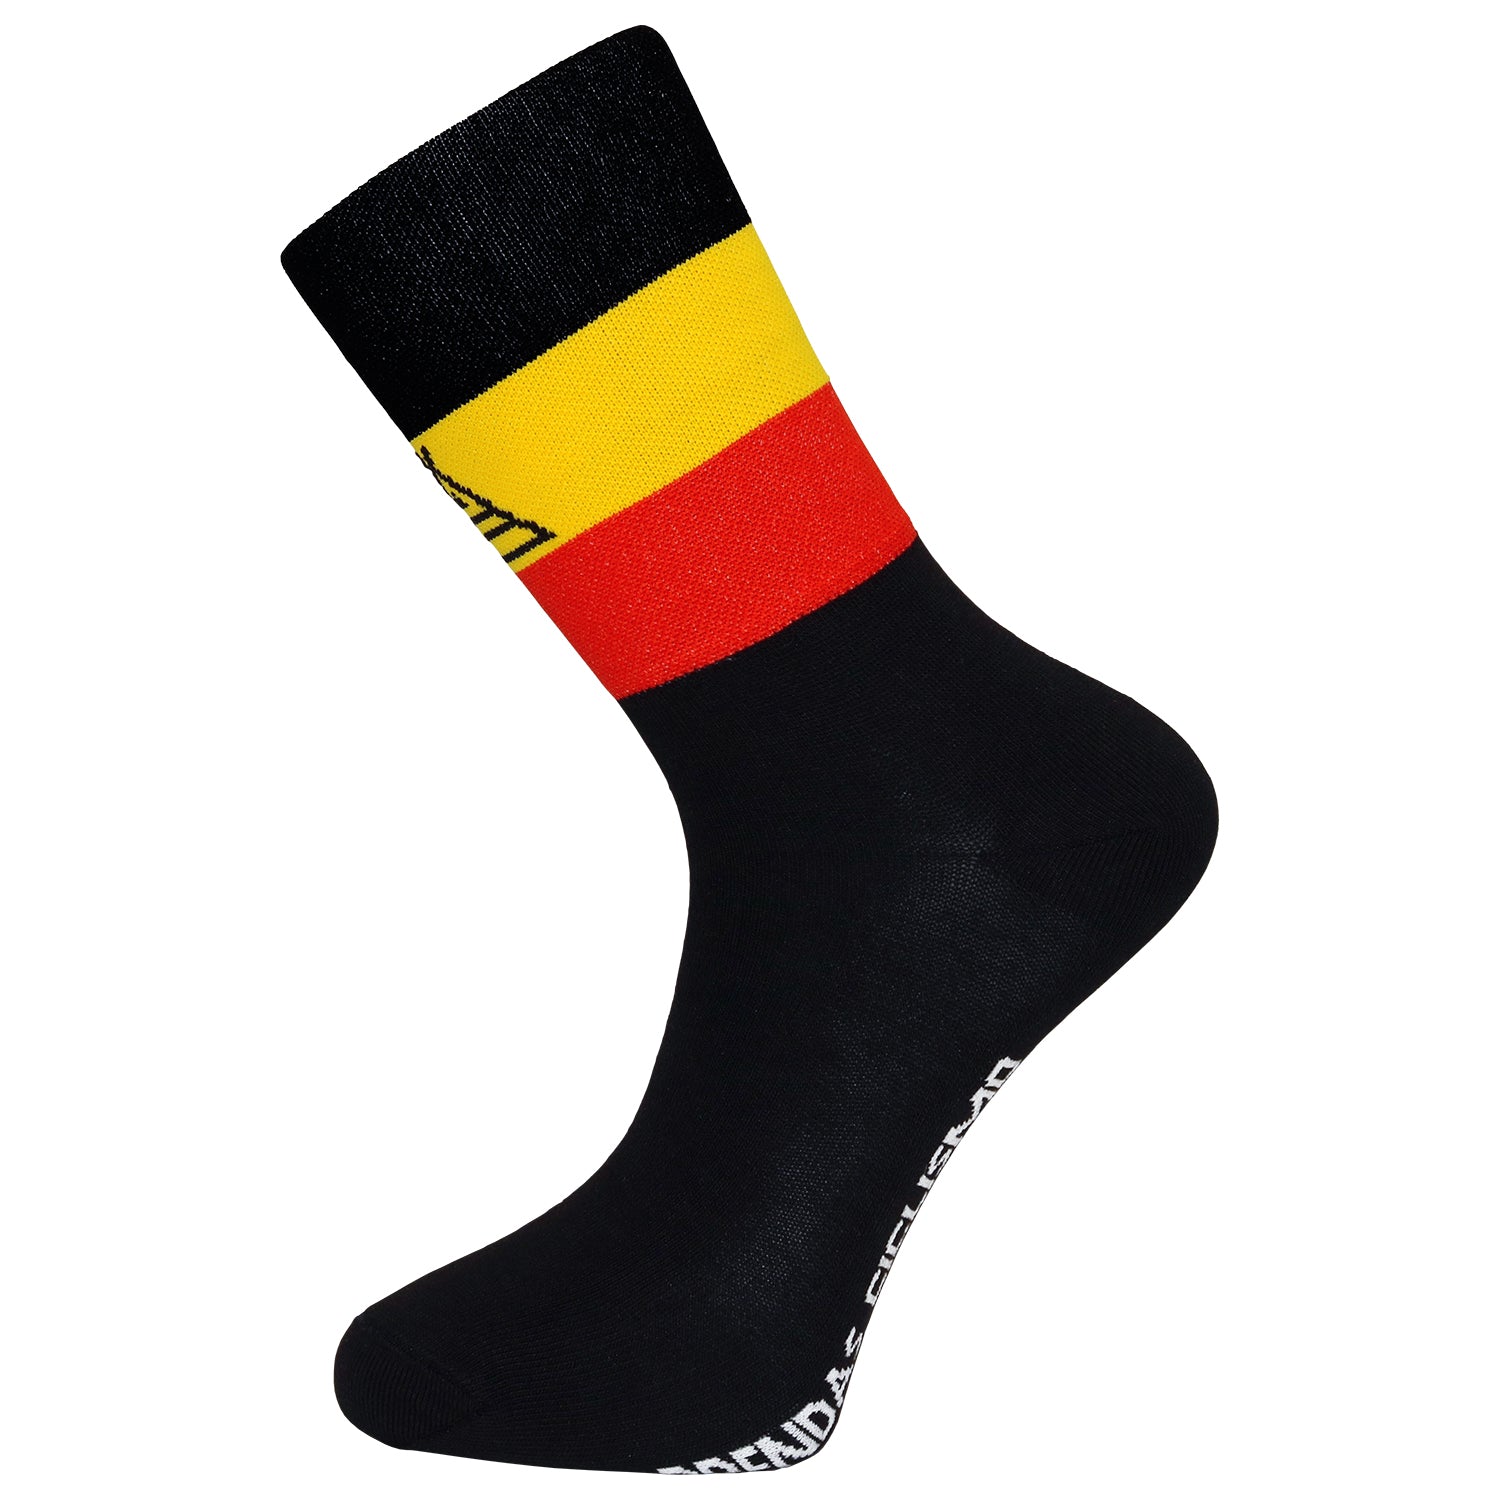 Prendas Ciclismo Belgian Tall Coolmax Socks